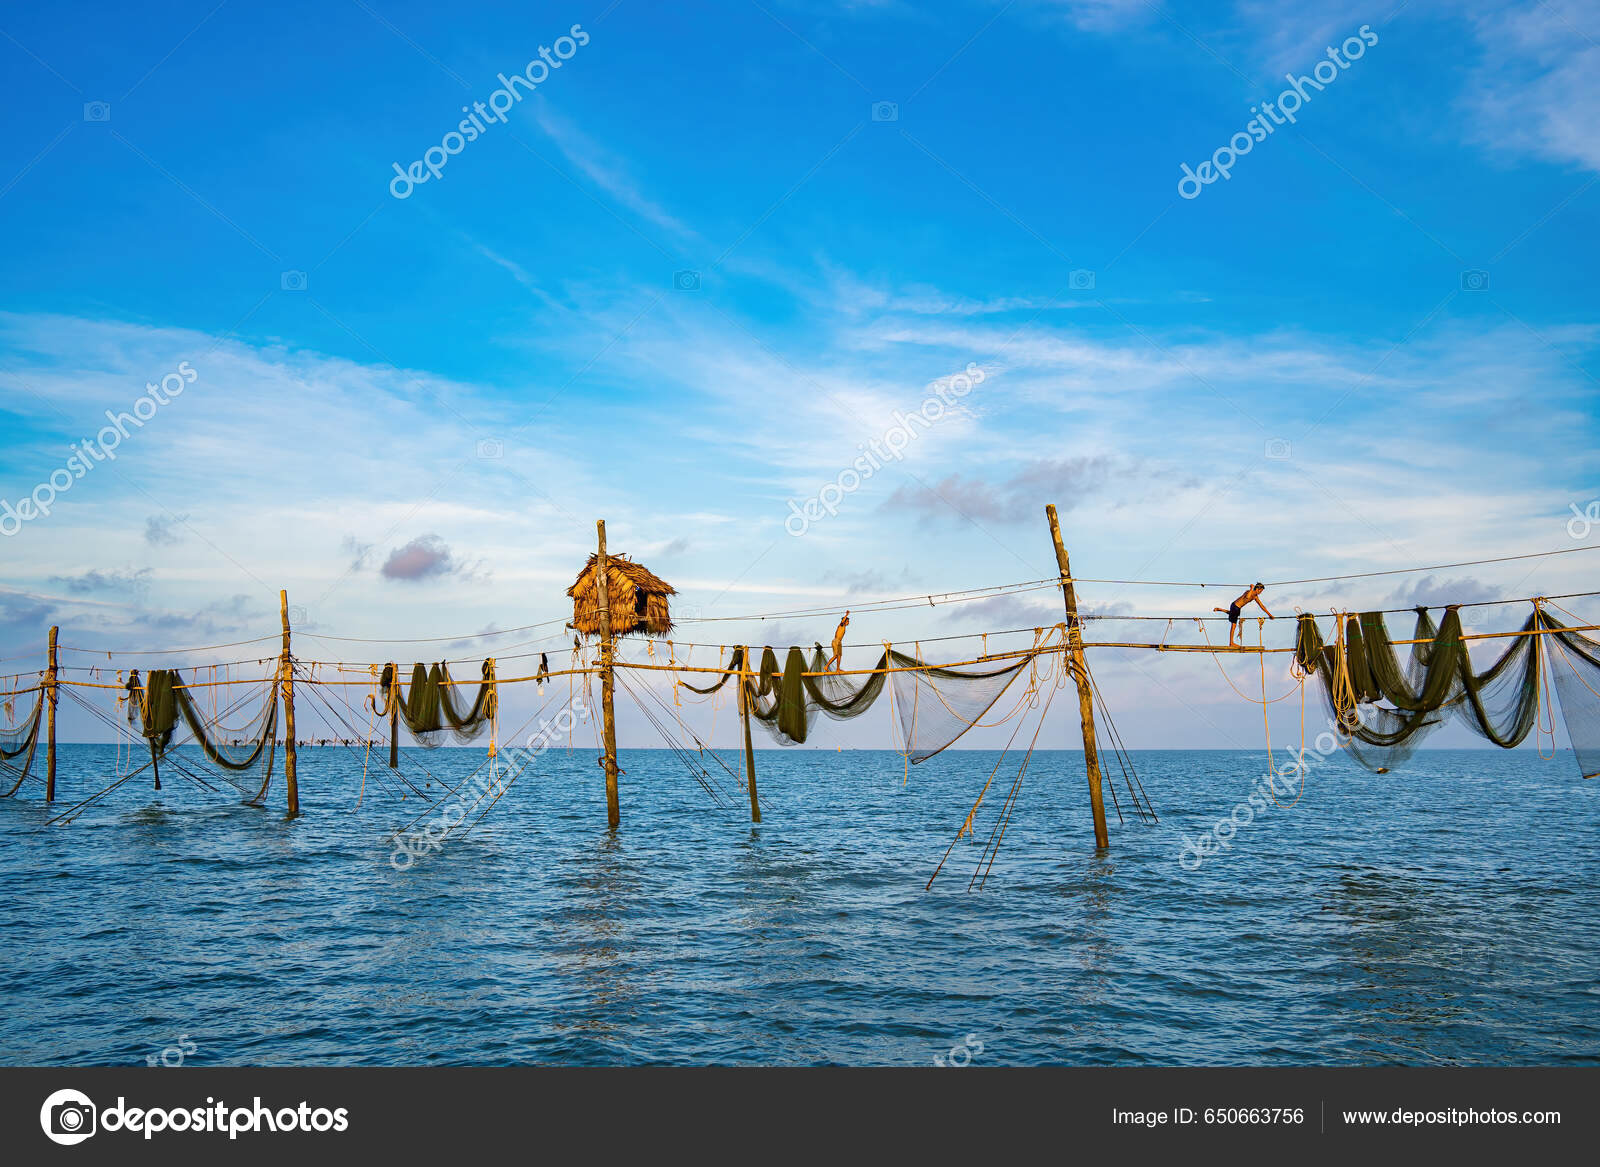 https://st5.depositphotos.com/76344838/65066/i/1600/depositphotos_650663756-stock-photo-two-fishermen-casting-nets-fishing.jpg